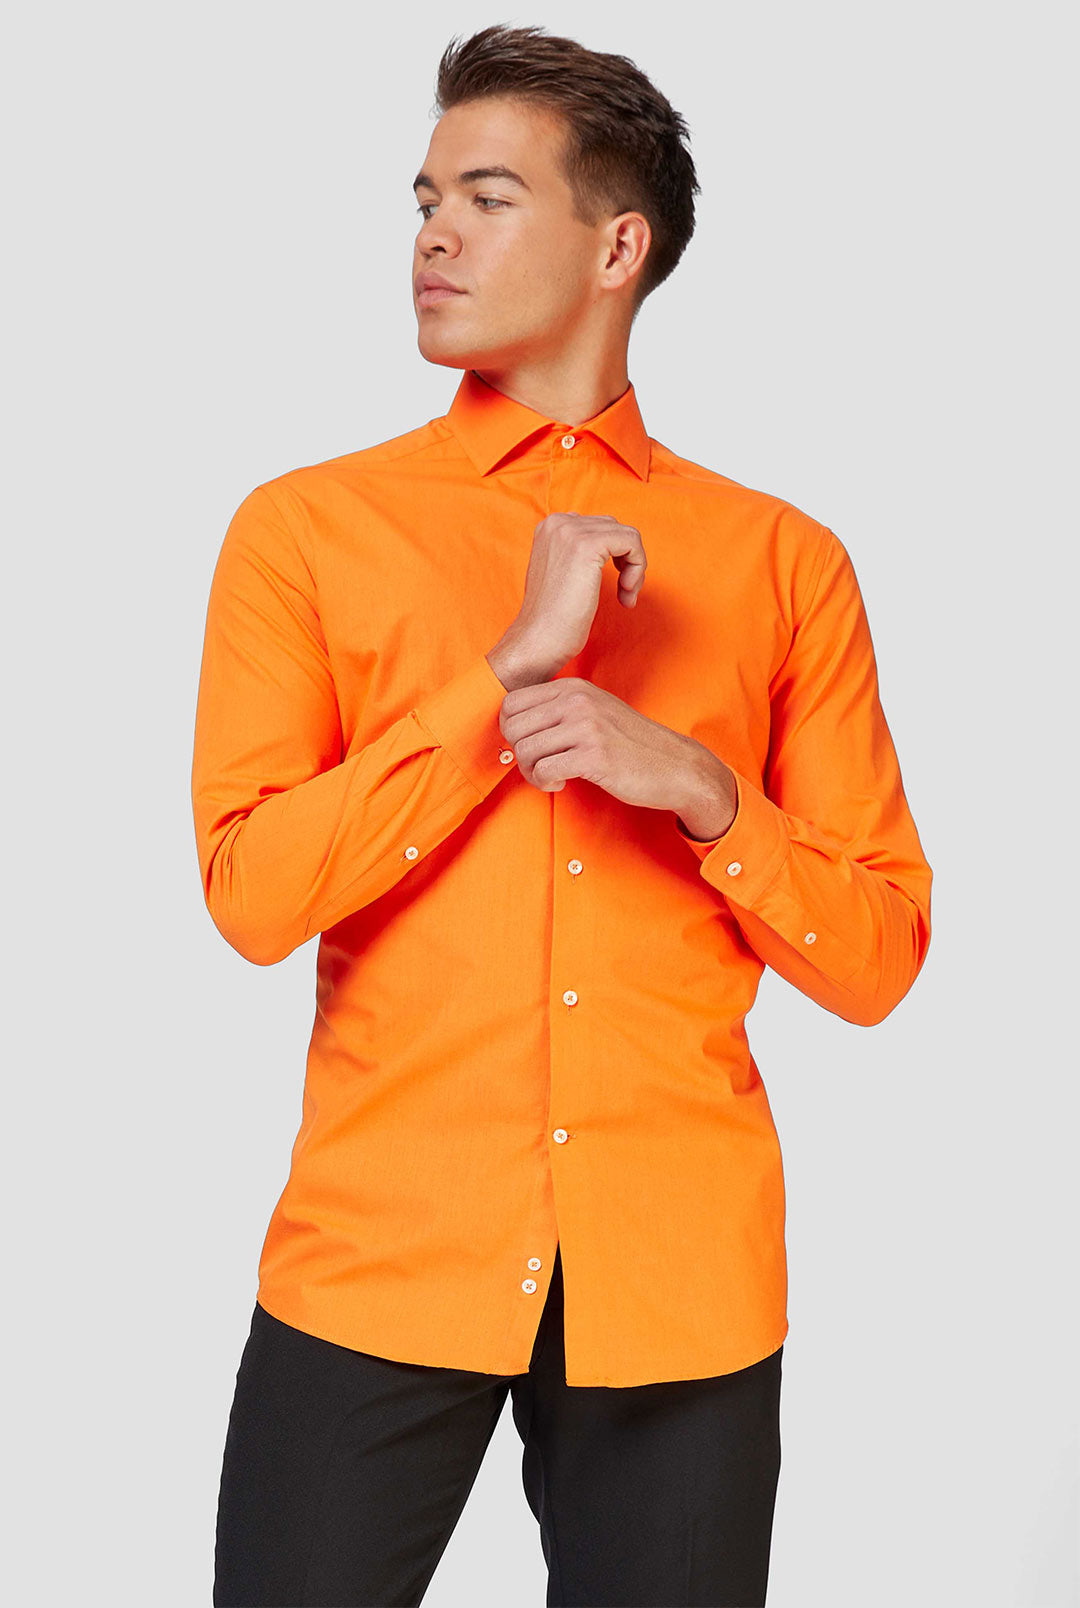 Orangefarbenes Herrenhemd | Hemd Business OppoSuits |